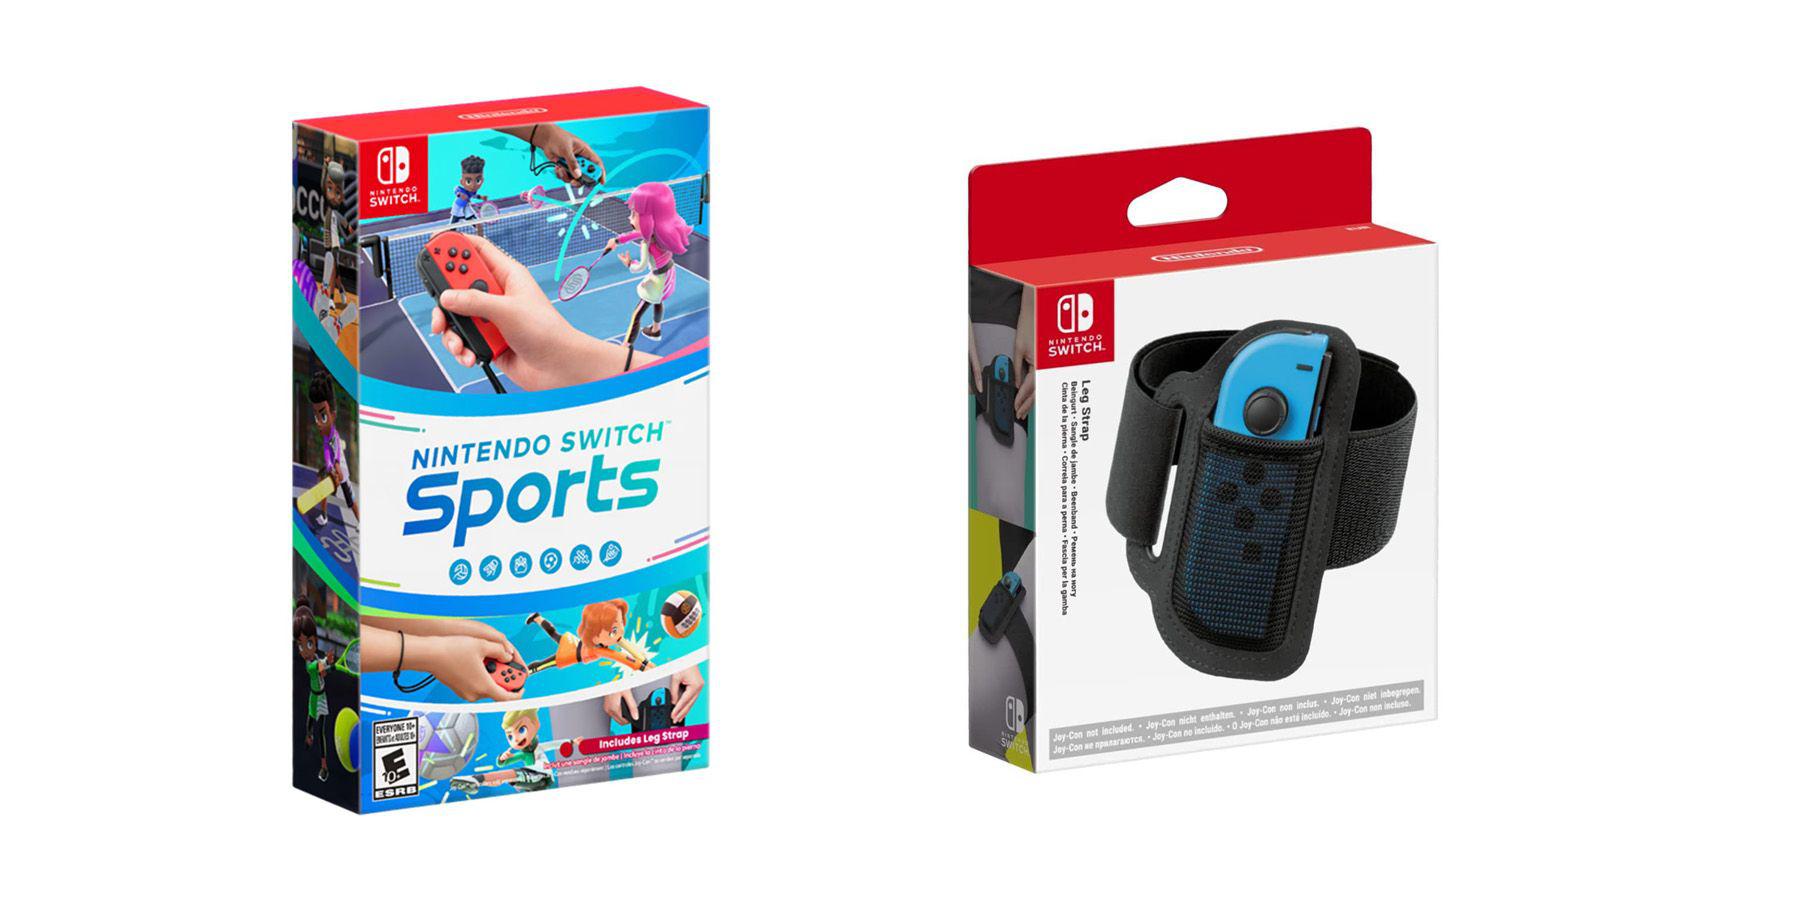 Nintendo Switch Sports ultrapassa marco de vendas